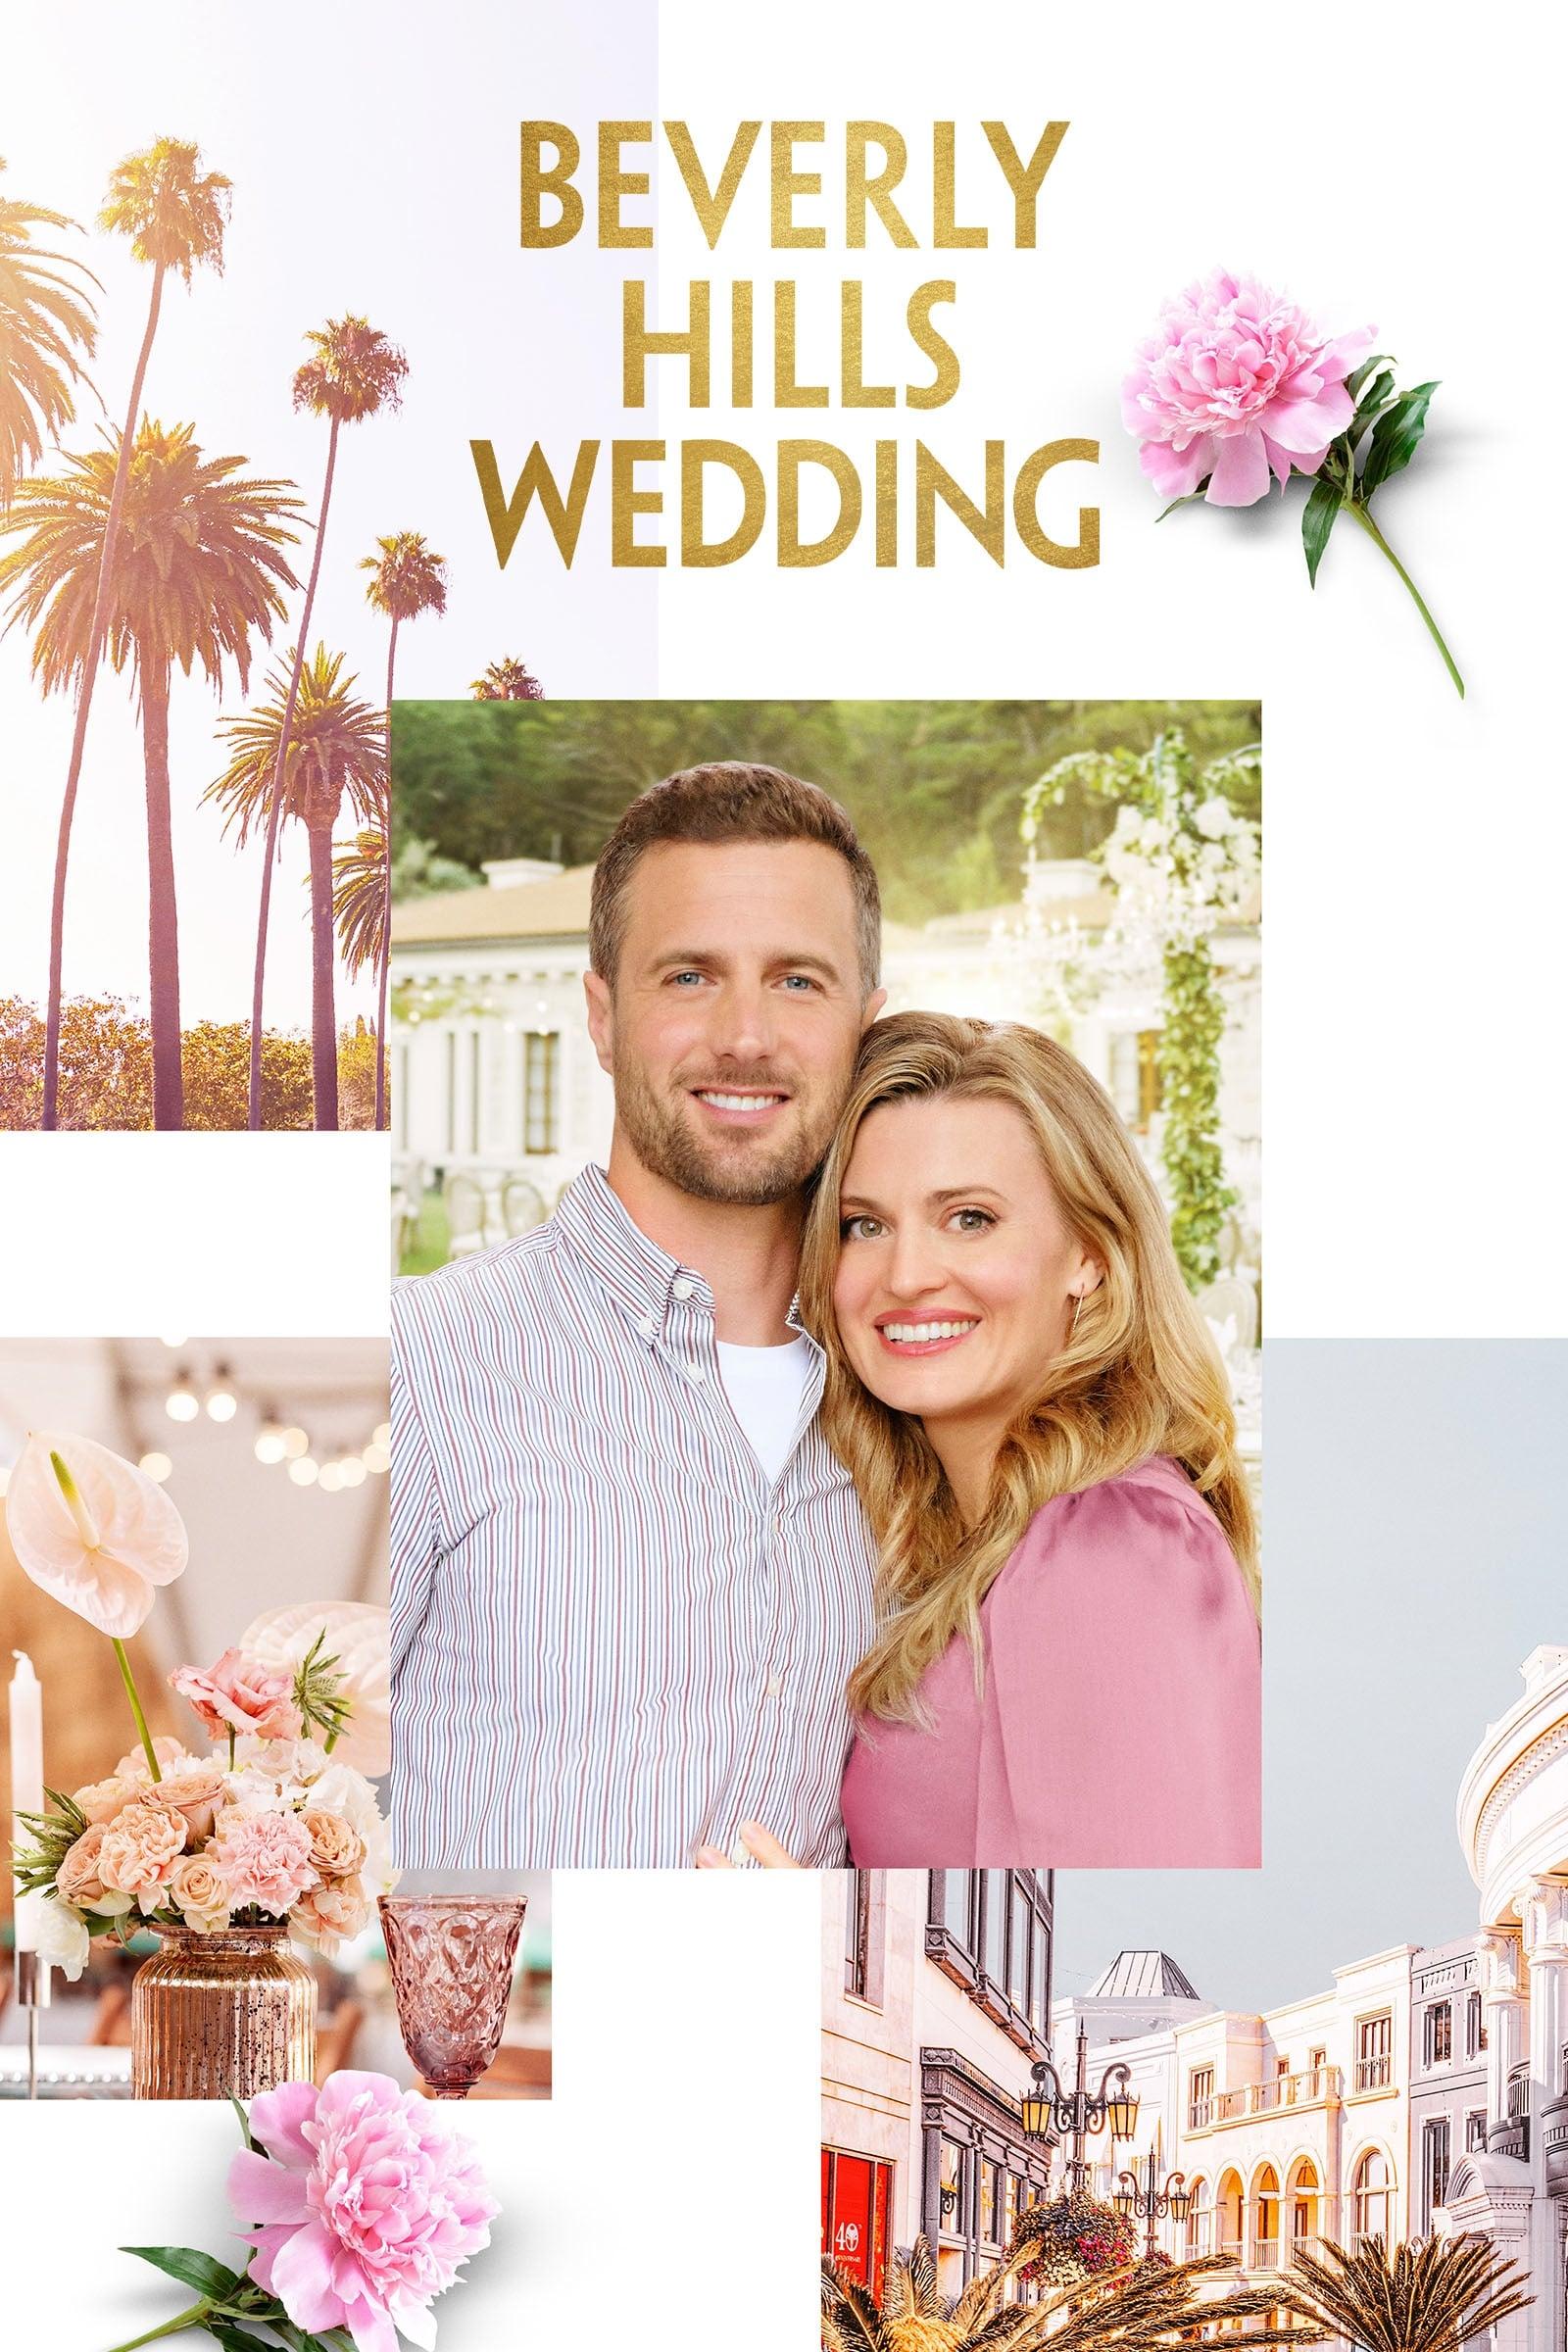 Beverly Hills Wedding poster